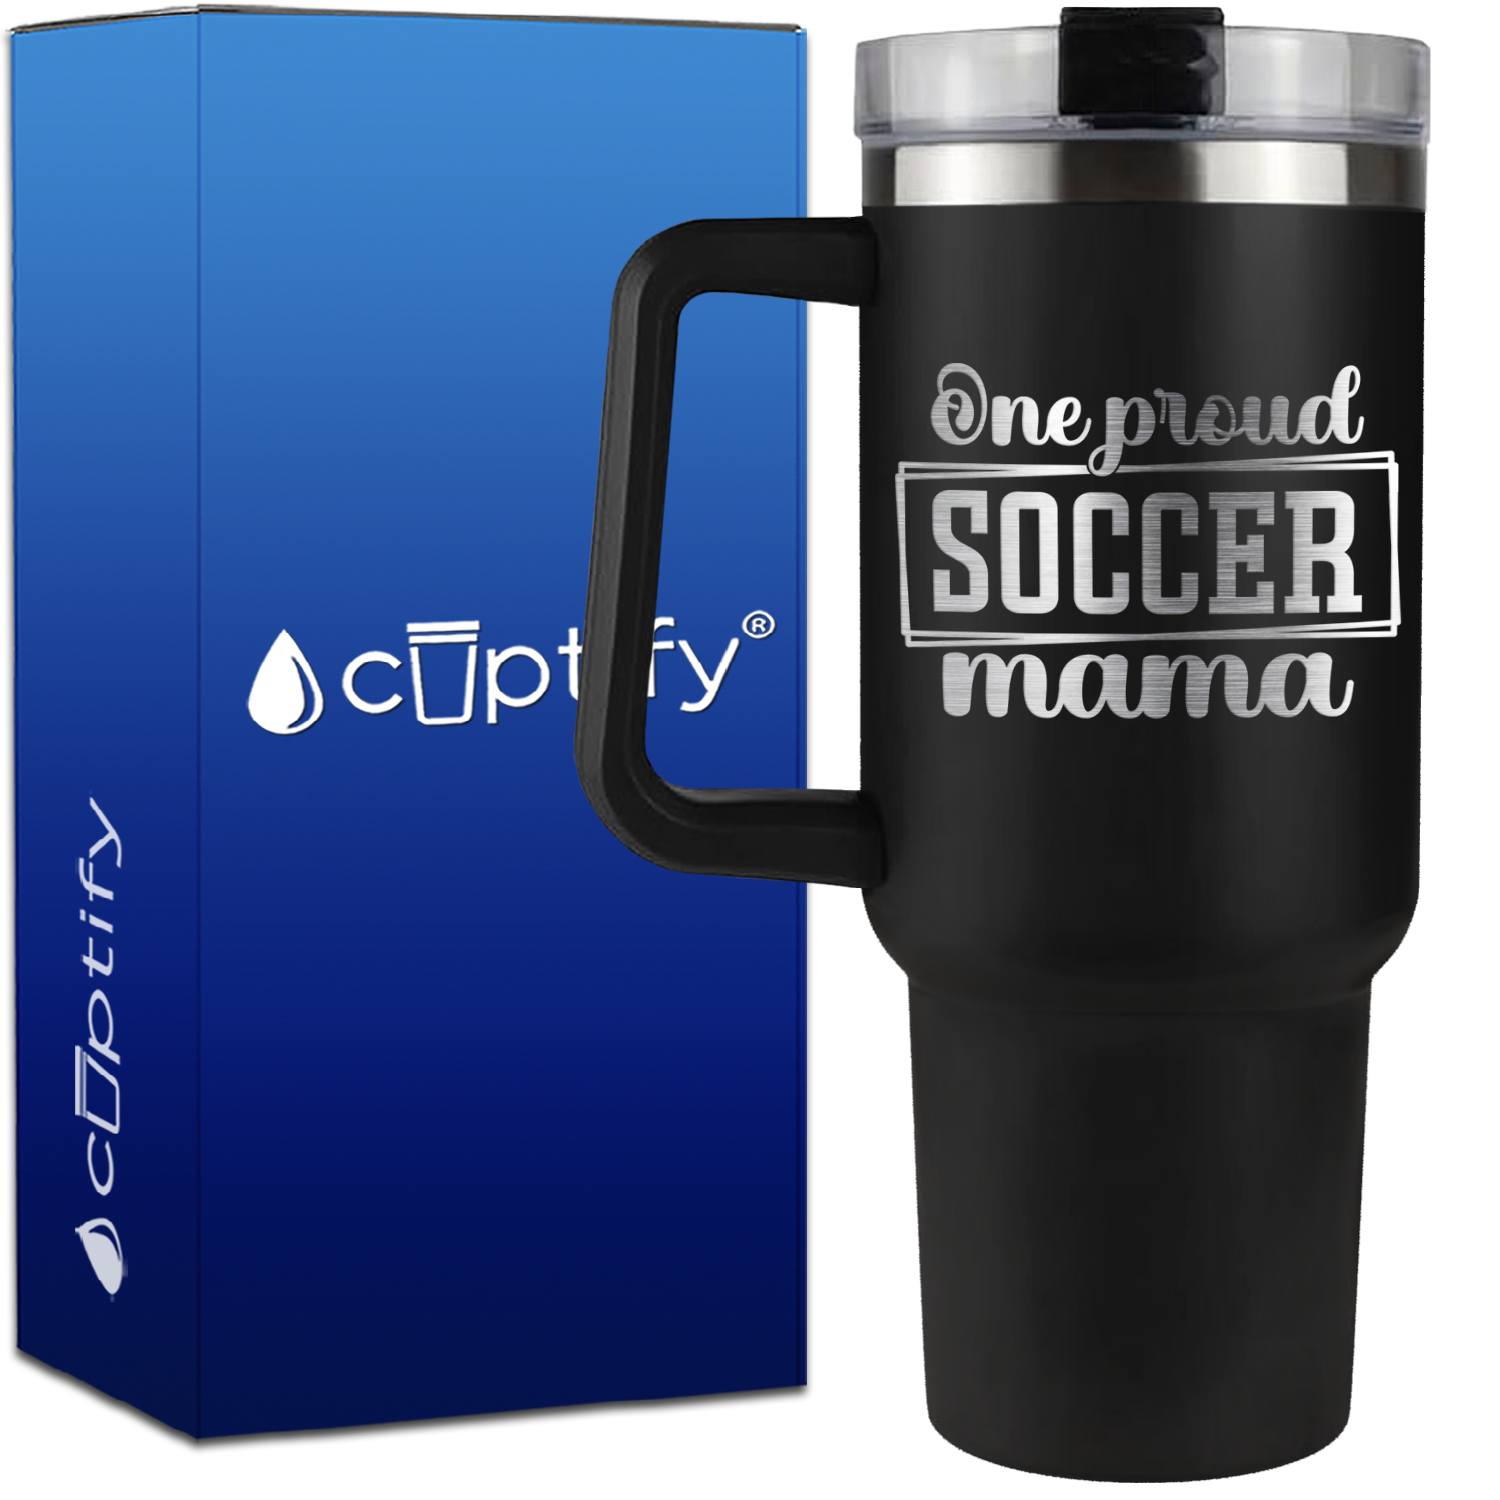 One Proud Soccer Mama on 40oz Soccer Traveler Mug